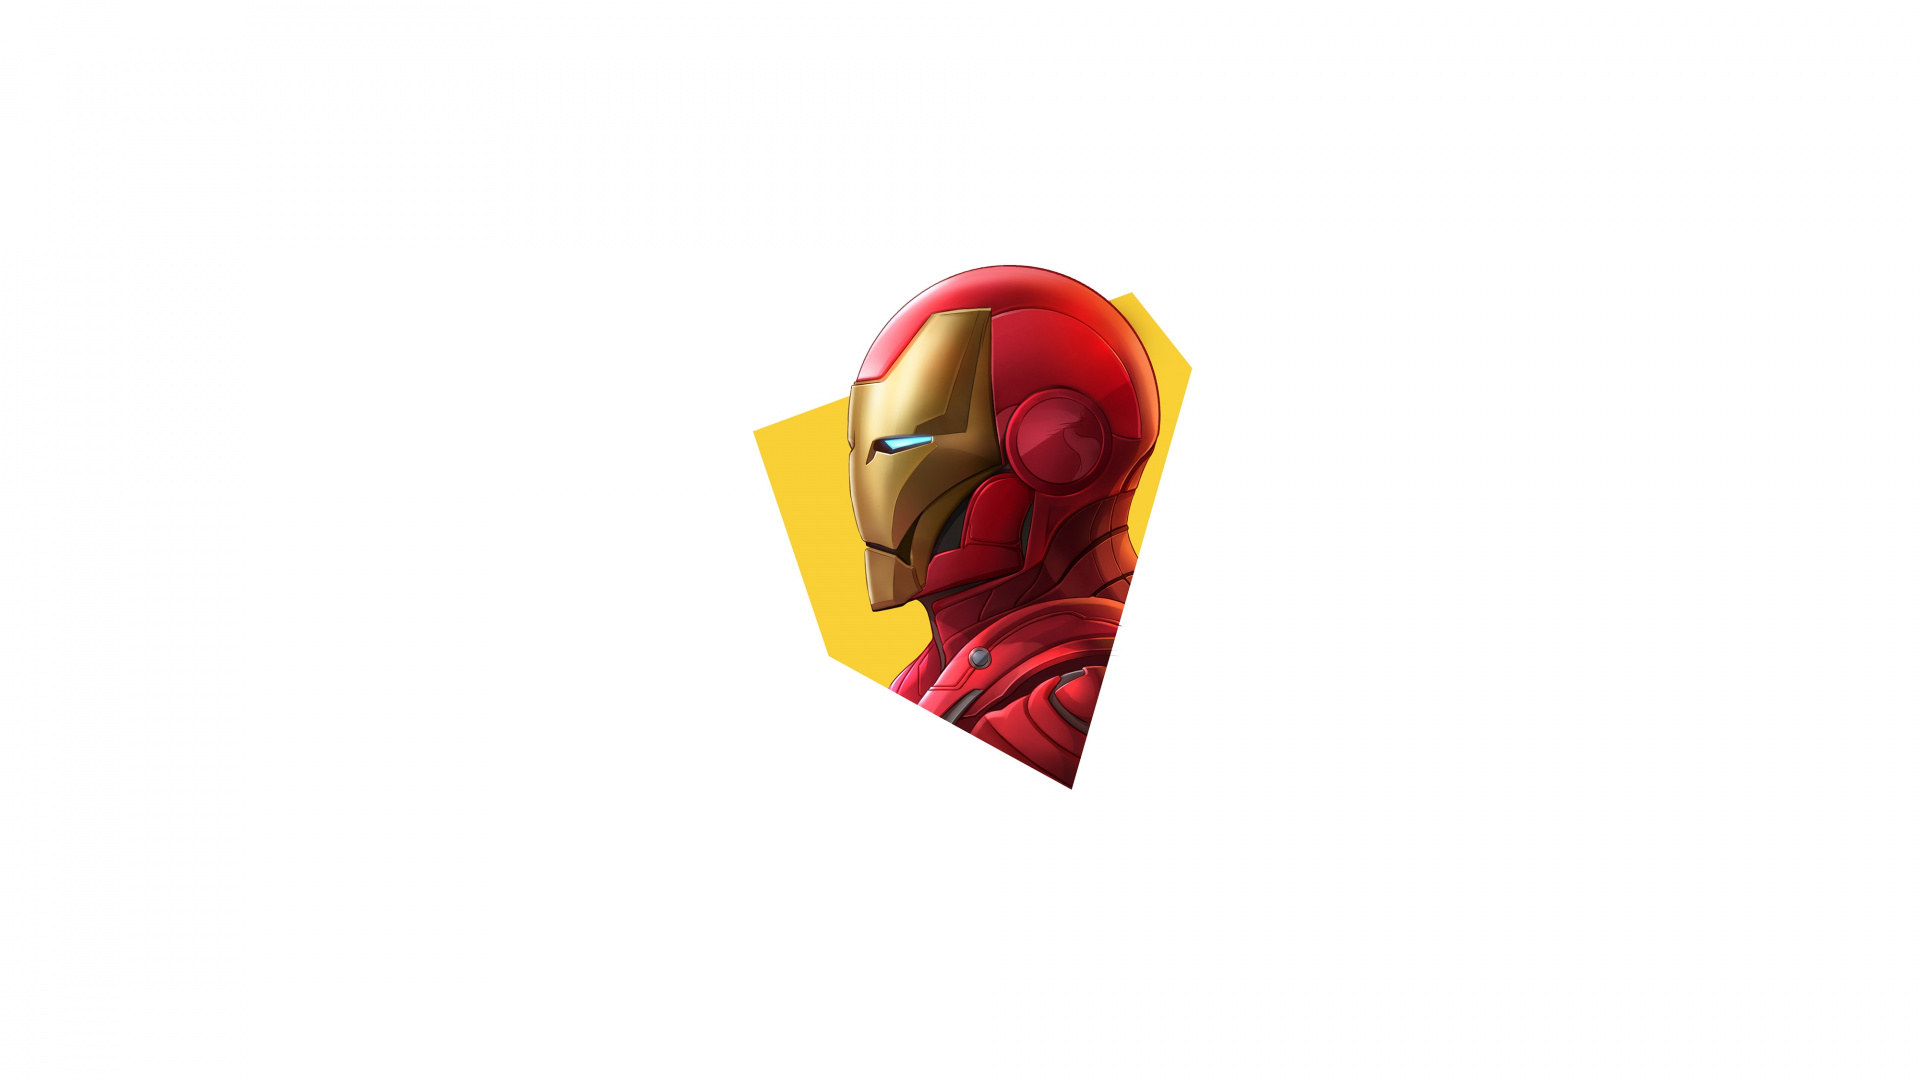 Downalod [1920x1080] - Iron Man , HD Wallpaper & Backgrounds